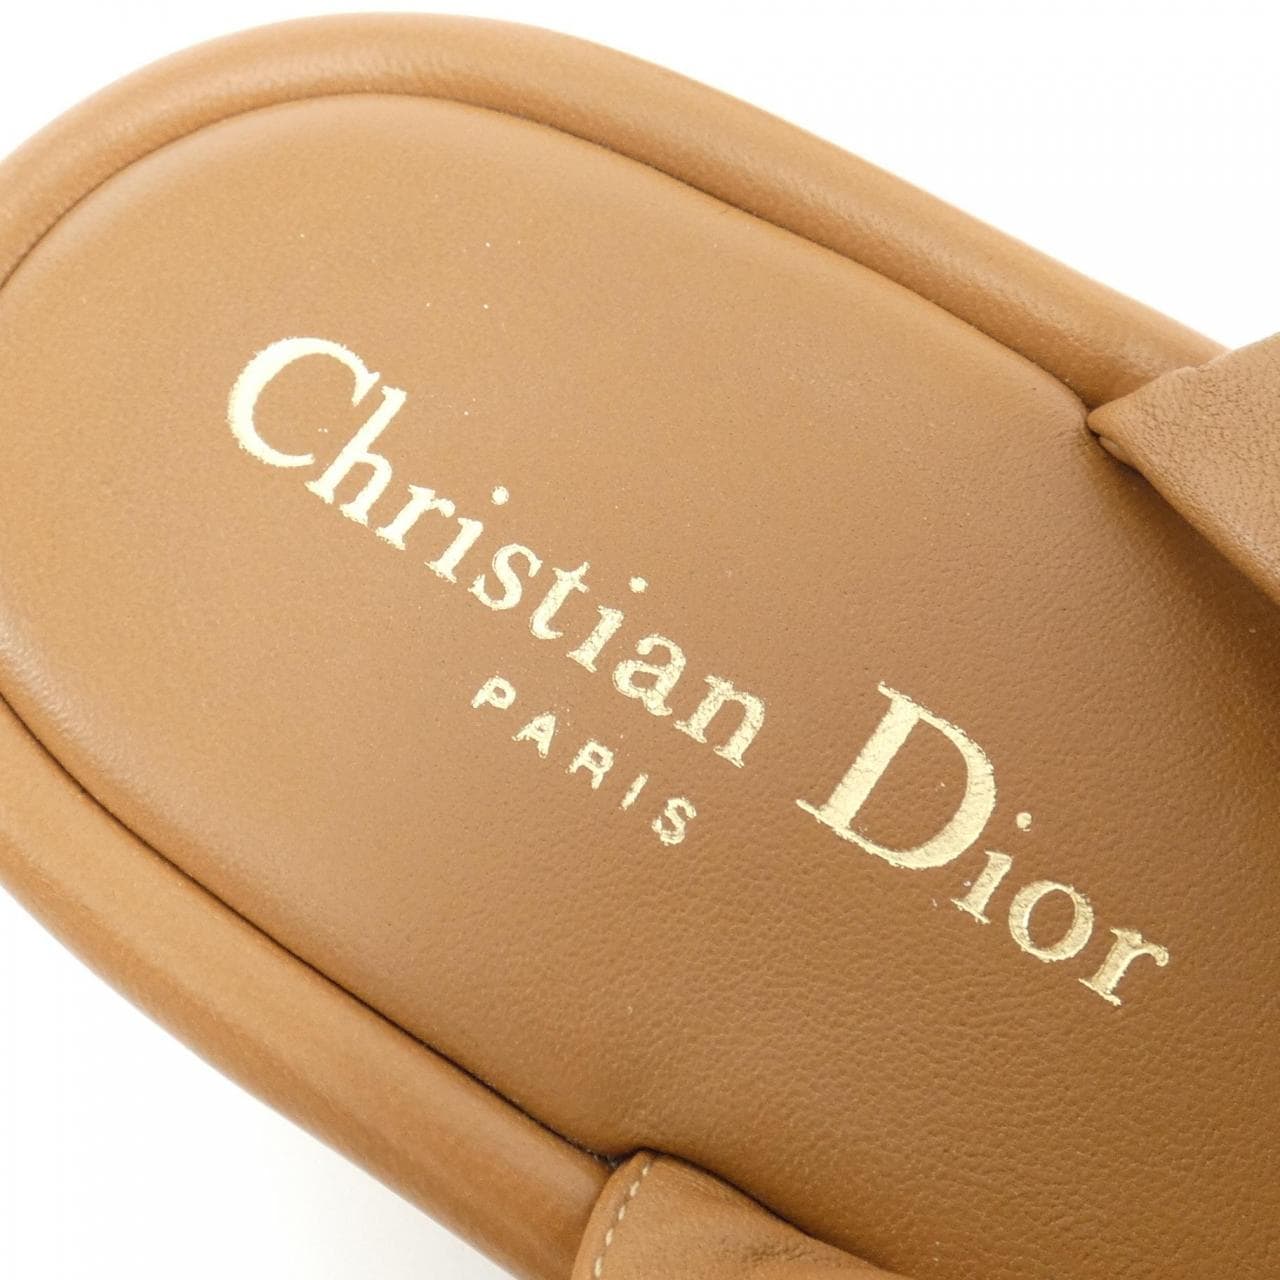 Christian DIOR sandals